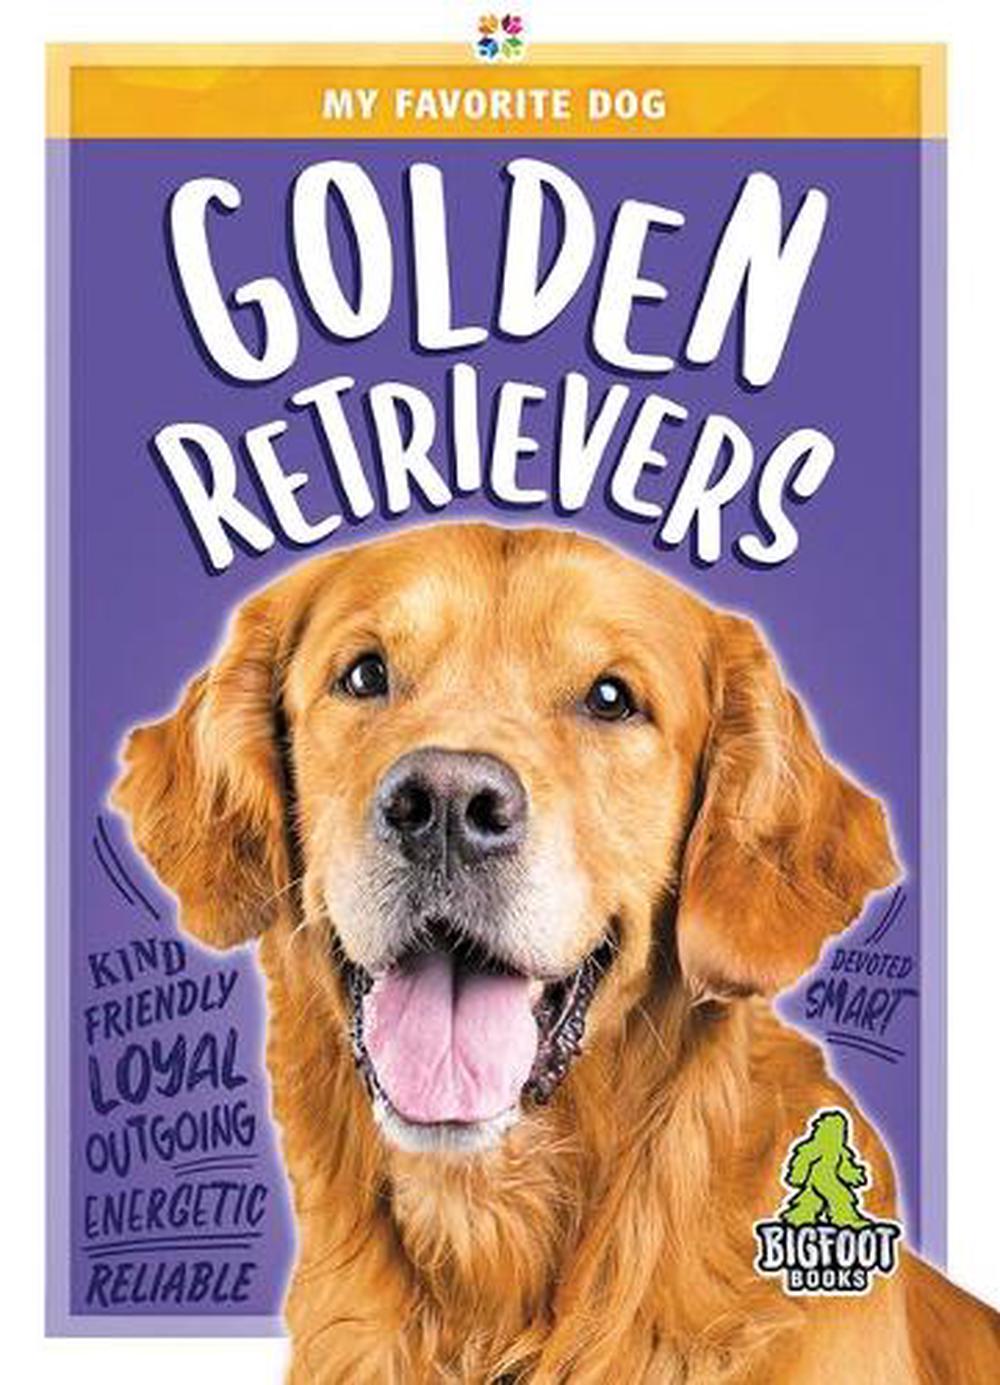 Golden Retrievers by K.C. Kelley (English) Library Binding Book Free ...